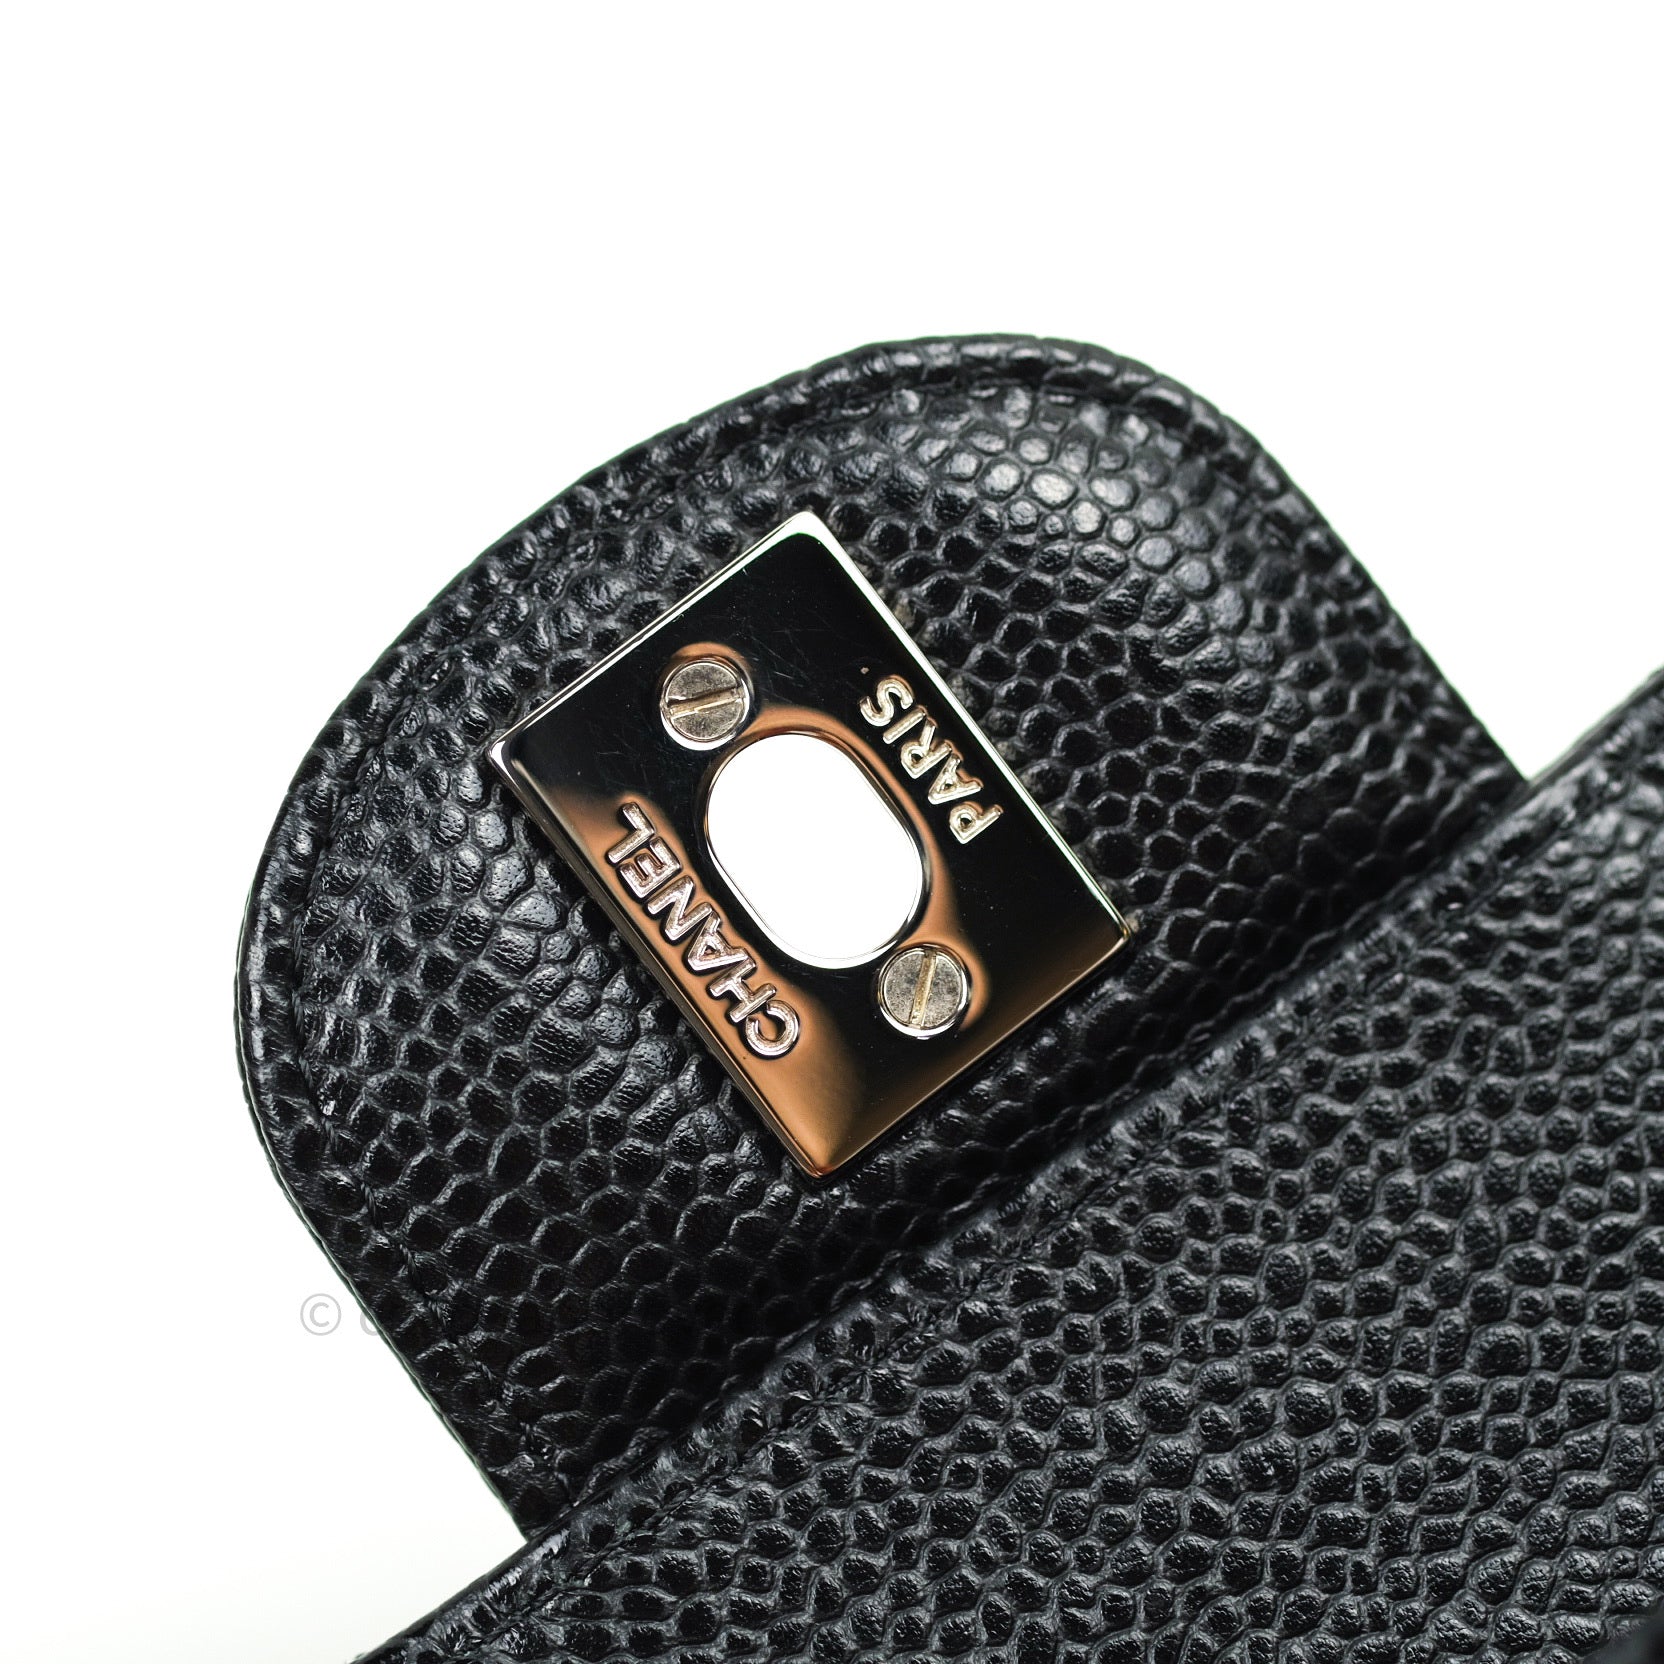 chanel caviar handbag